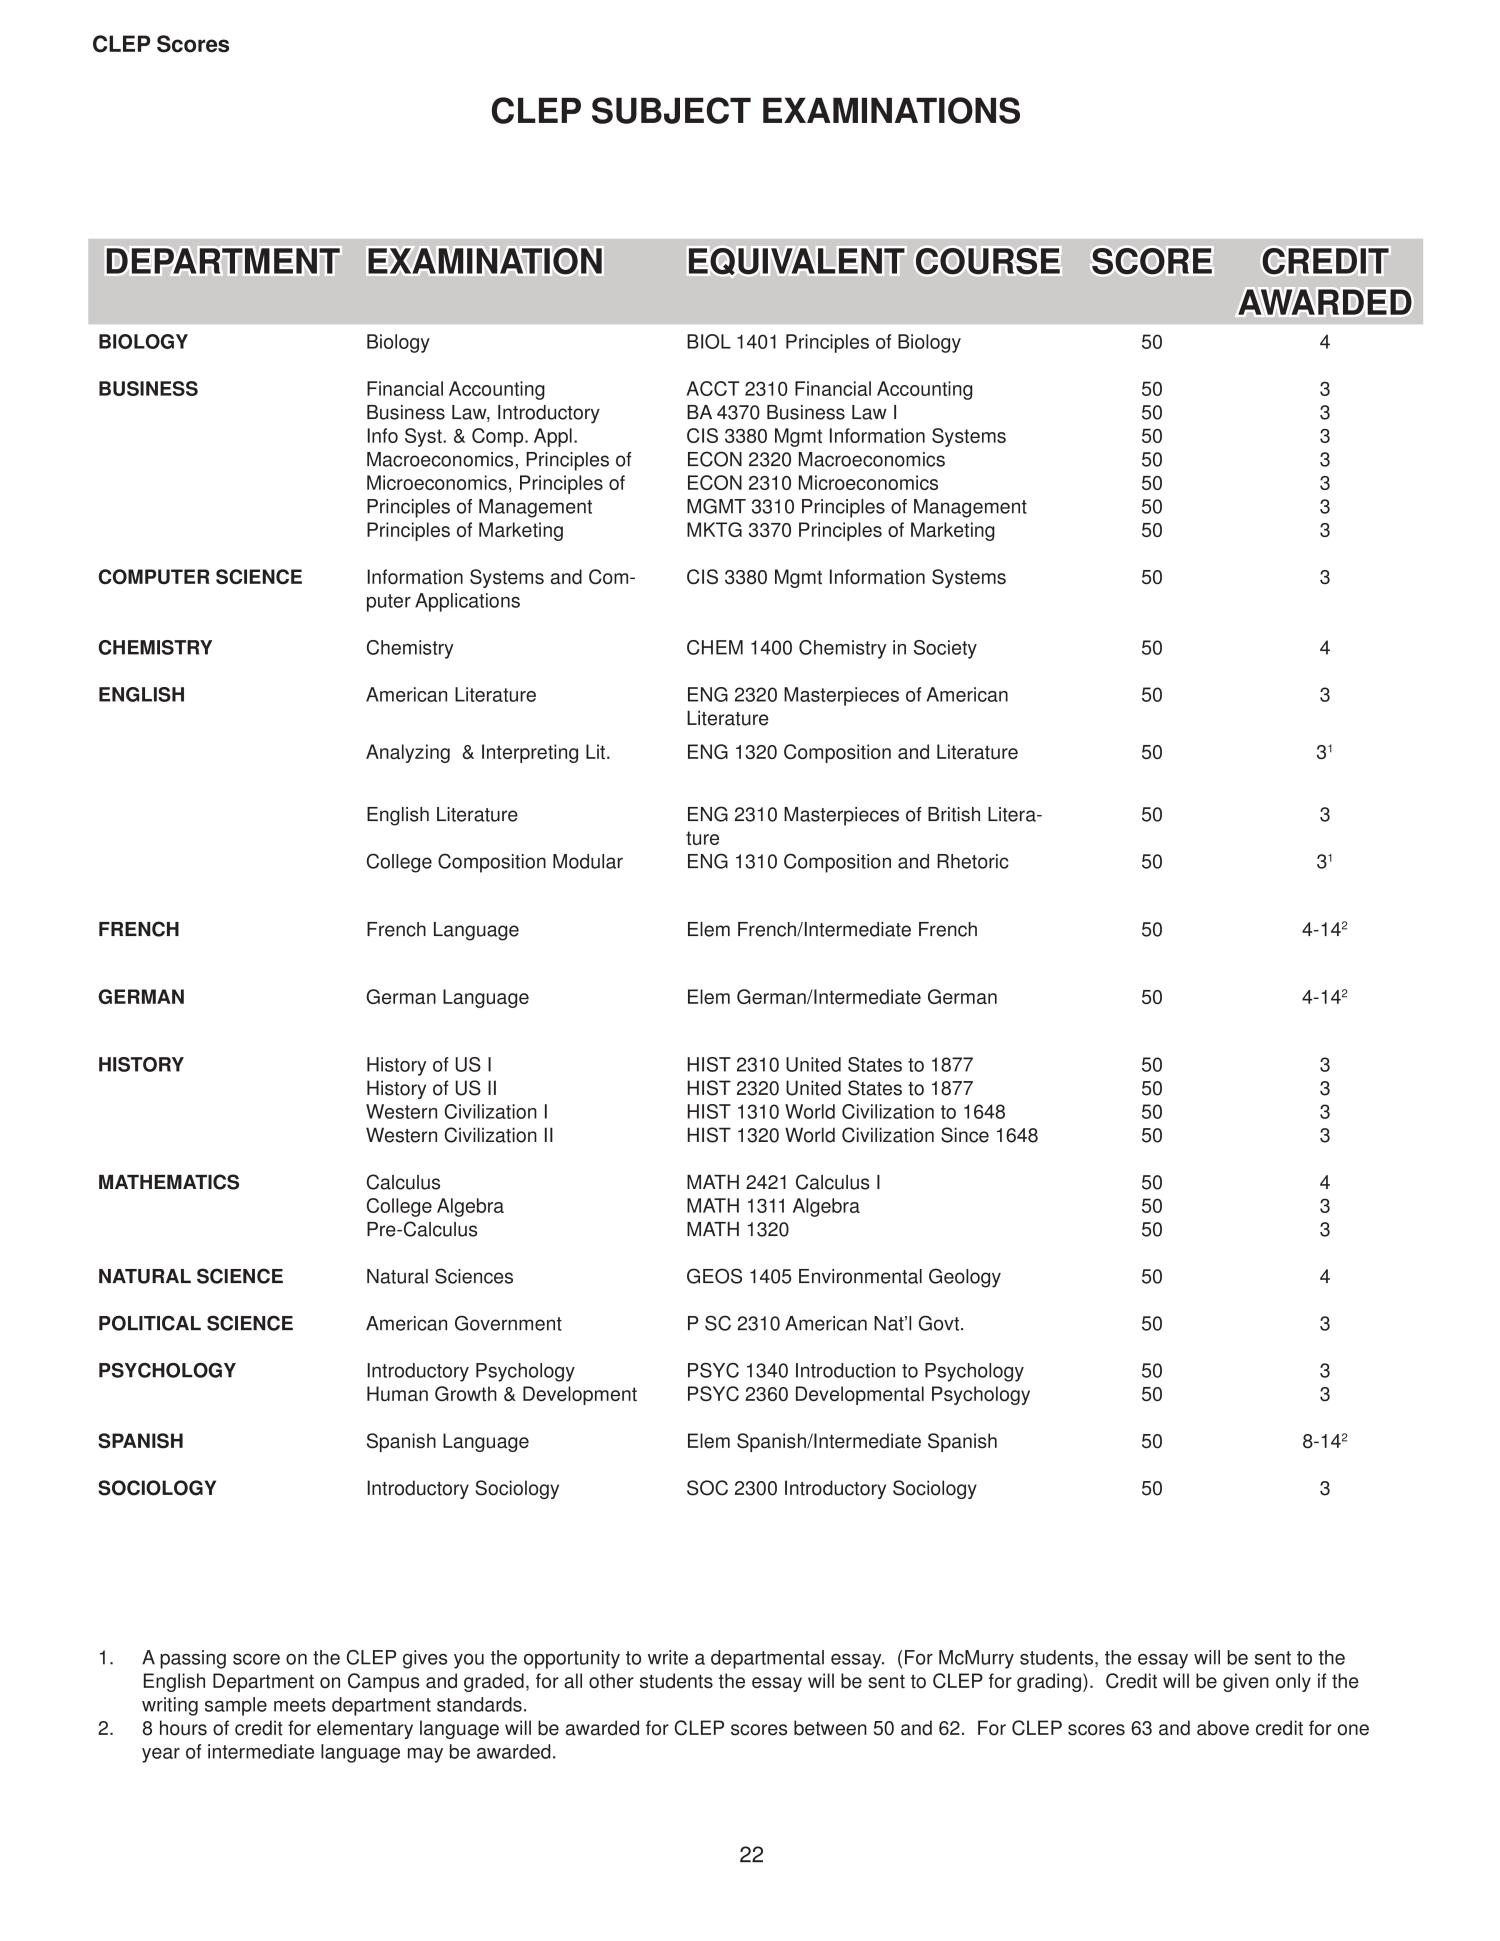 Bulletin of McMurry University, 2010-2011
                                                
                                                    22
                                                